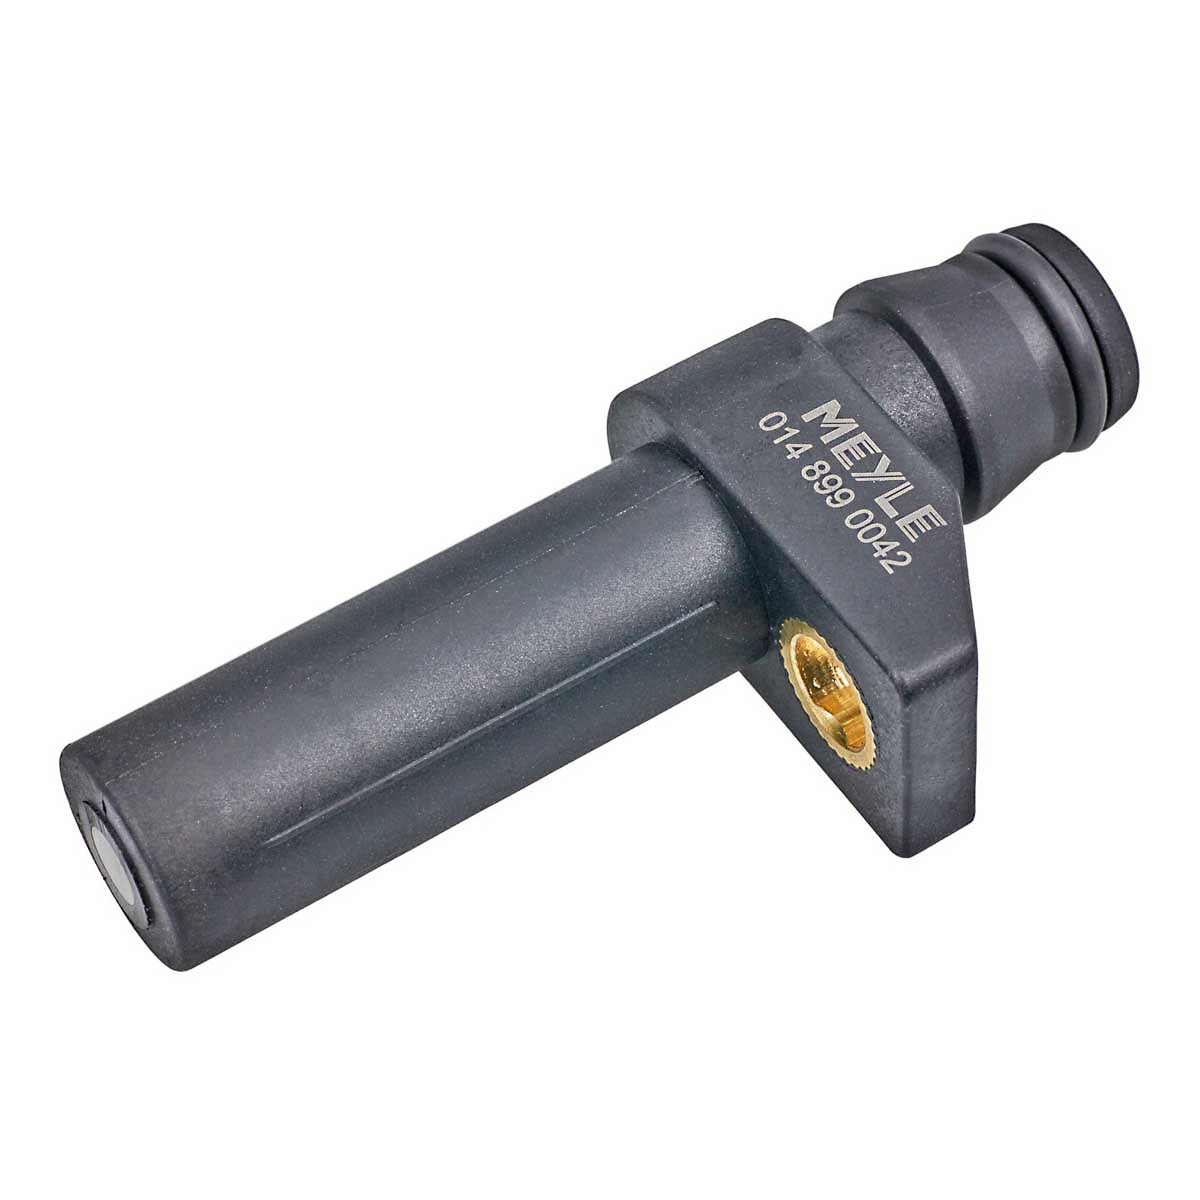 MEYLE 014 899 0042 Crankshaft sensor 2-pin connector, Inductive Sensor, with seal ring, without cable, ORIGINAL Quality